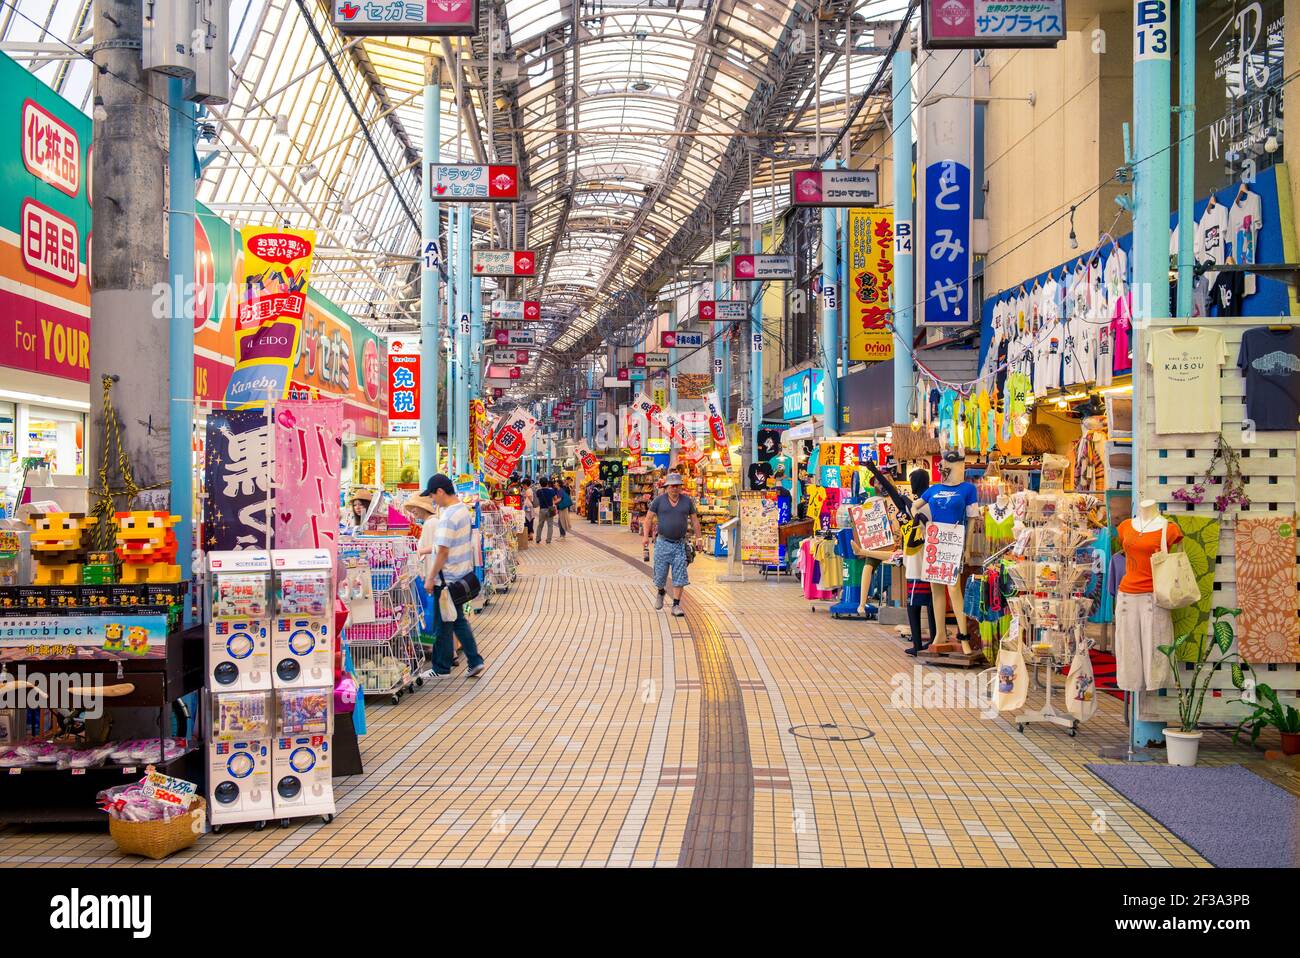 May 26, 2017: Heiwa Dori off of Kokusai Street in naha city, okinawa, japan. Heiwa dori, translated as Peace Street, is a covered shopping arcade feat Stock Photo